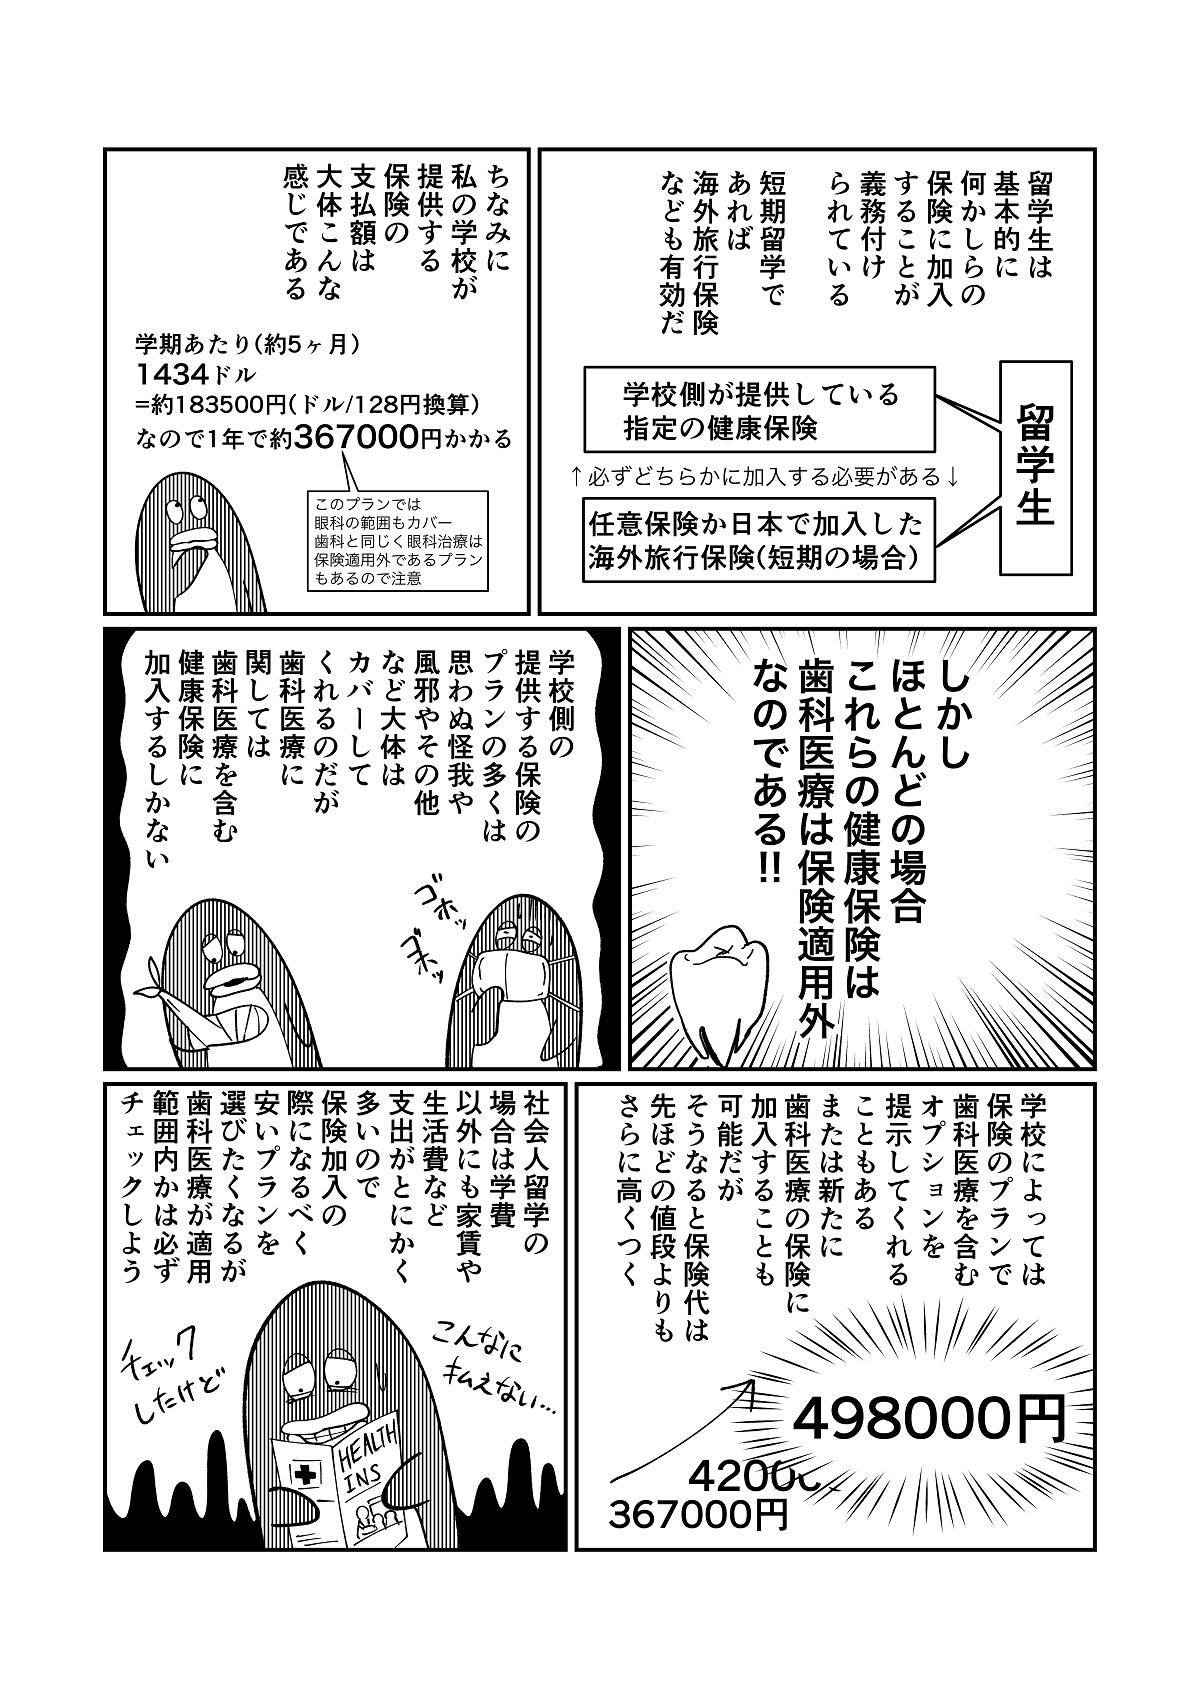 https://www.ryugaku.co.jp/column/images/jawamura18_3_1200.jpg